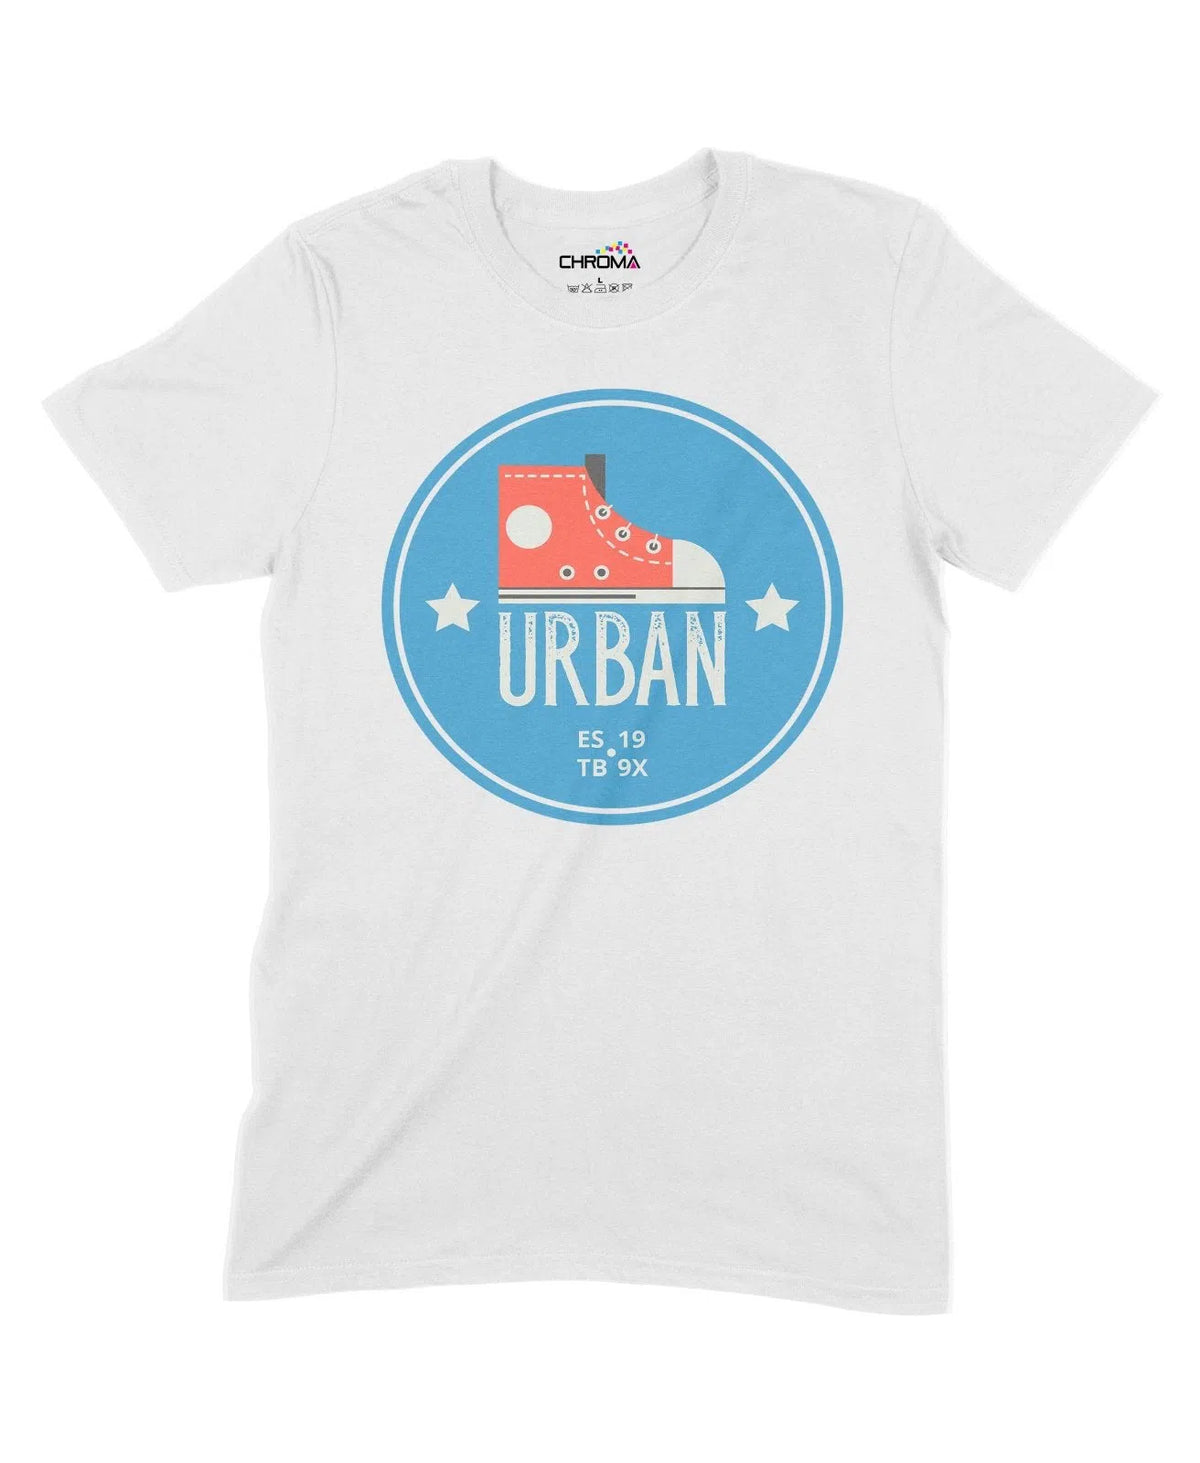 Urban Converse Unisex Adult T-Shirt Chroma Clothing